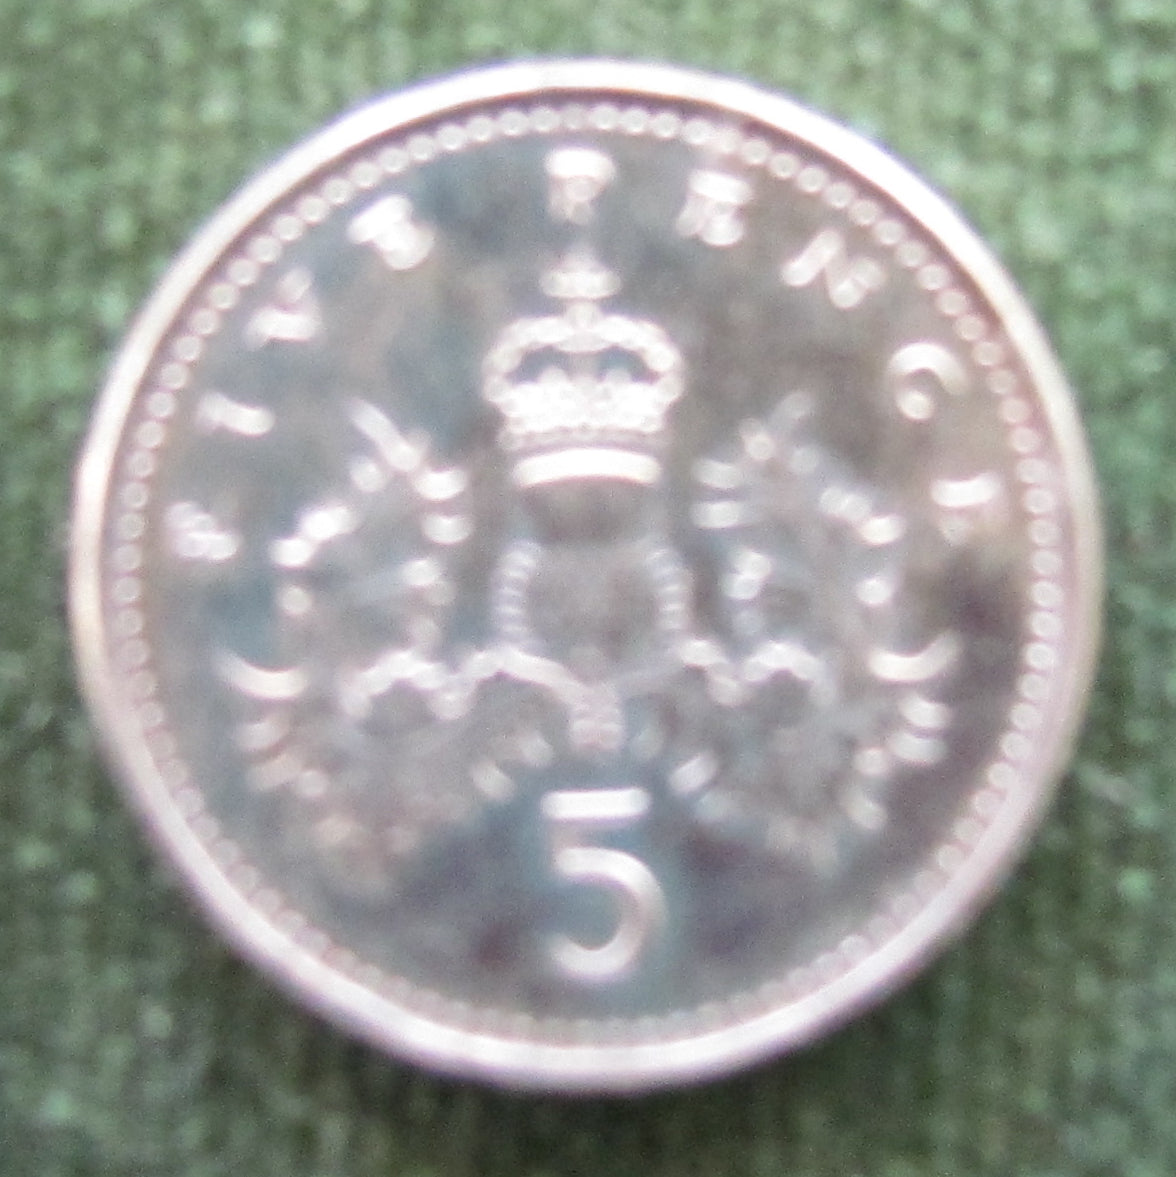 GB British UK English 2000 5 New Pence Queen Elizabeth II Coin